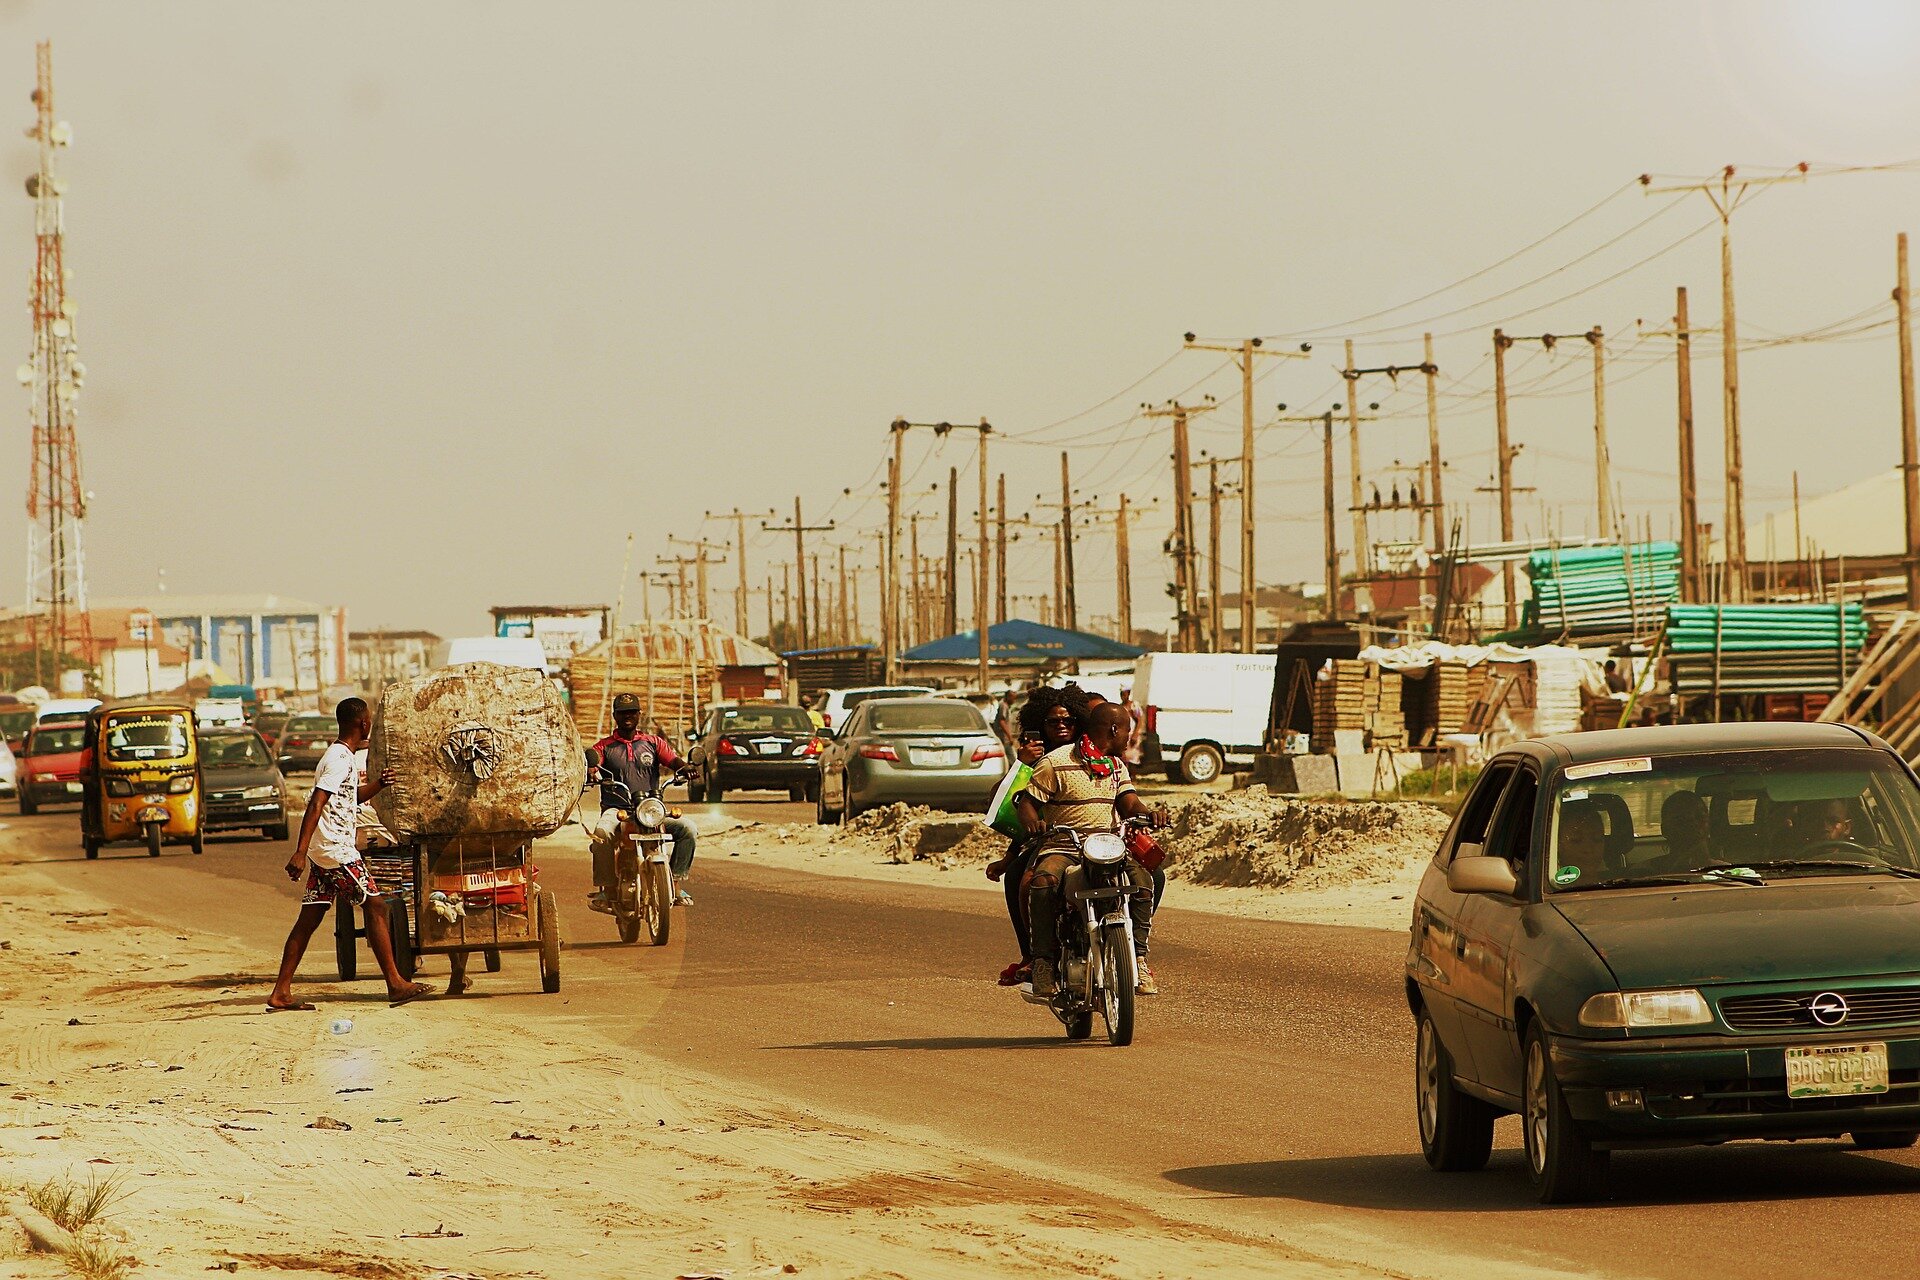 Nigeria’s mobile money system has a dark side even though it’s convenient: Study explores the risks